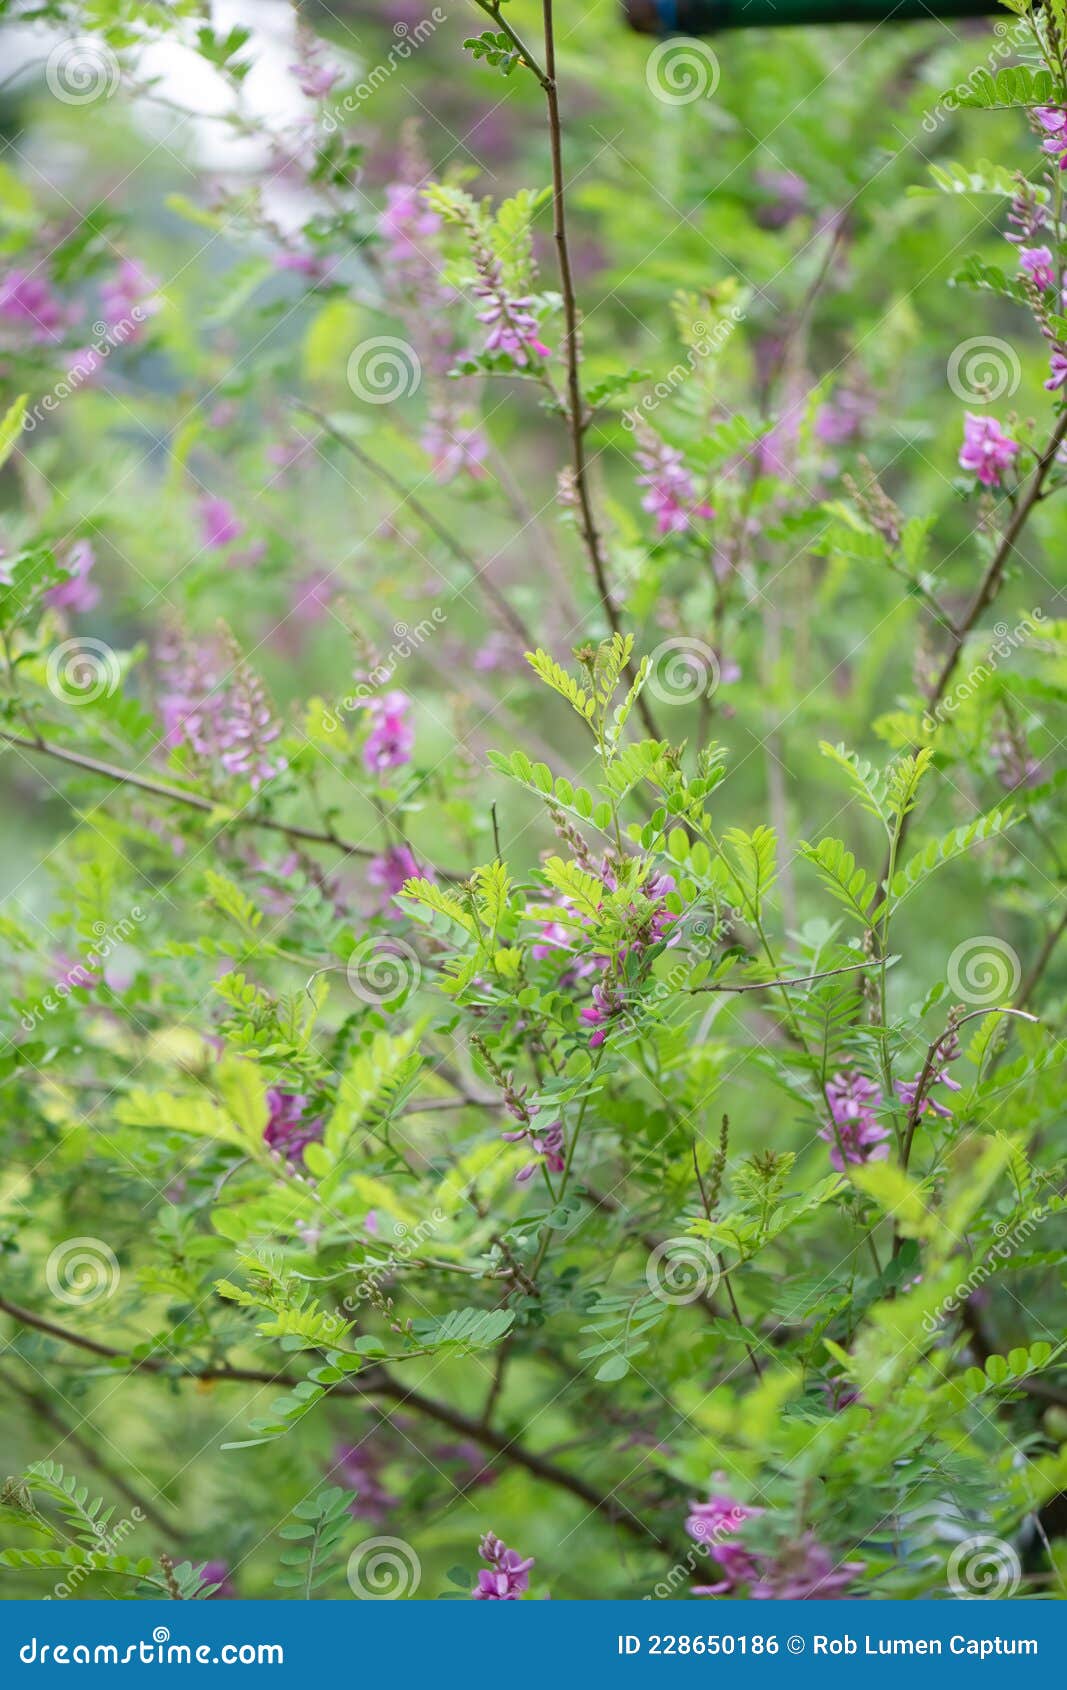 true indigo indigofera tinctoria, flowering a shrub